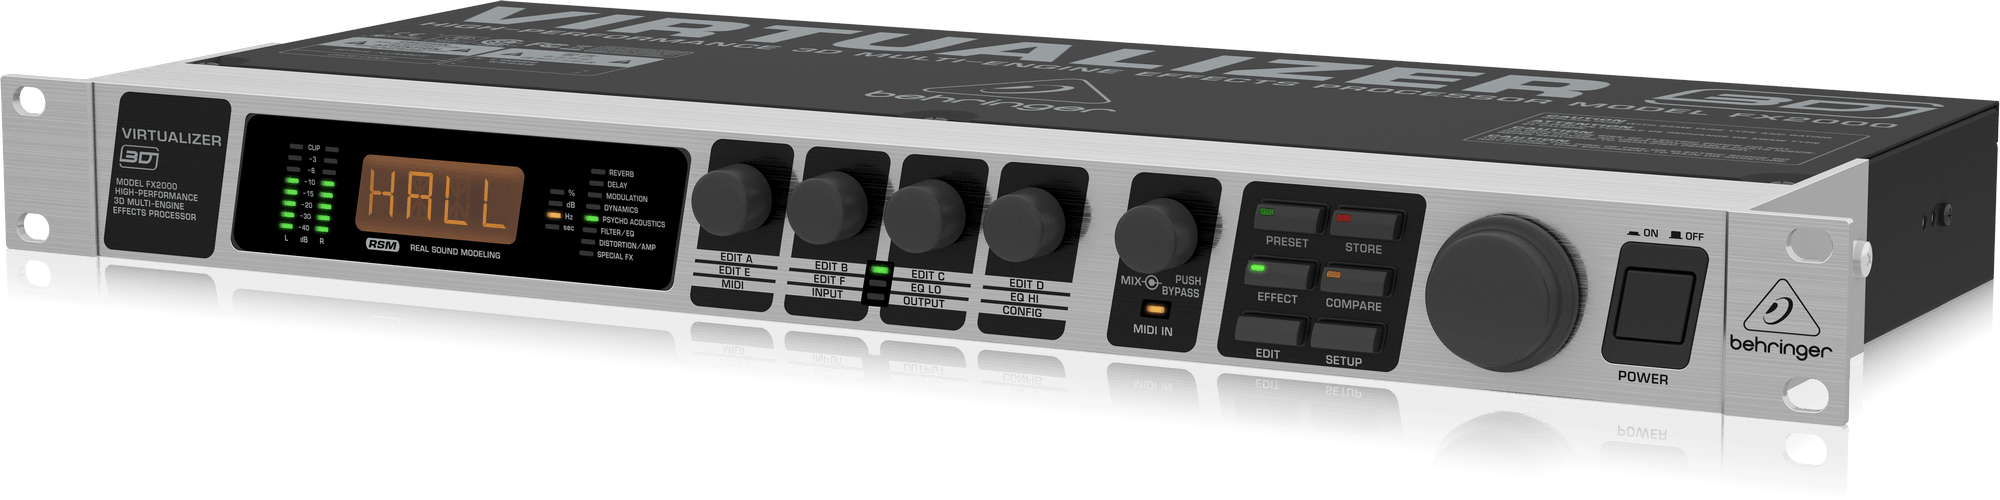 Behringer Virtualizer 3D FX2000 Rackmount Effects Processor (FX-2000) | BEHRINGER , Zoso Music